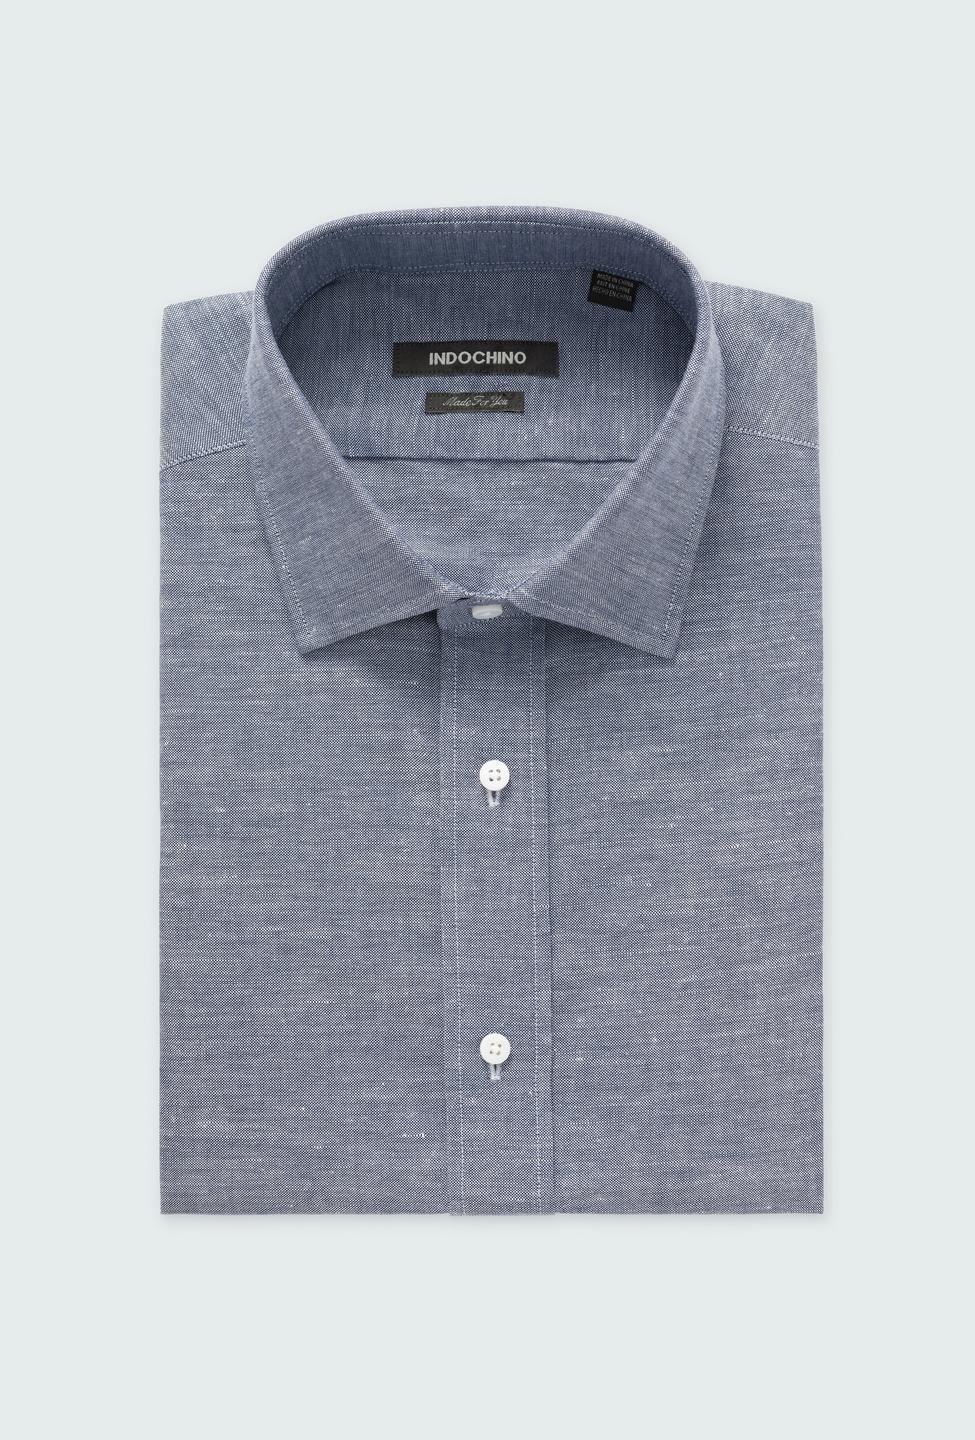 Navy shirt - Sudbury Solid Design from Seasonal Indochino Collection